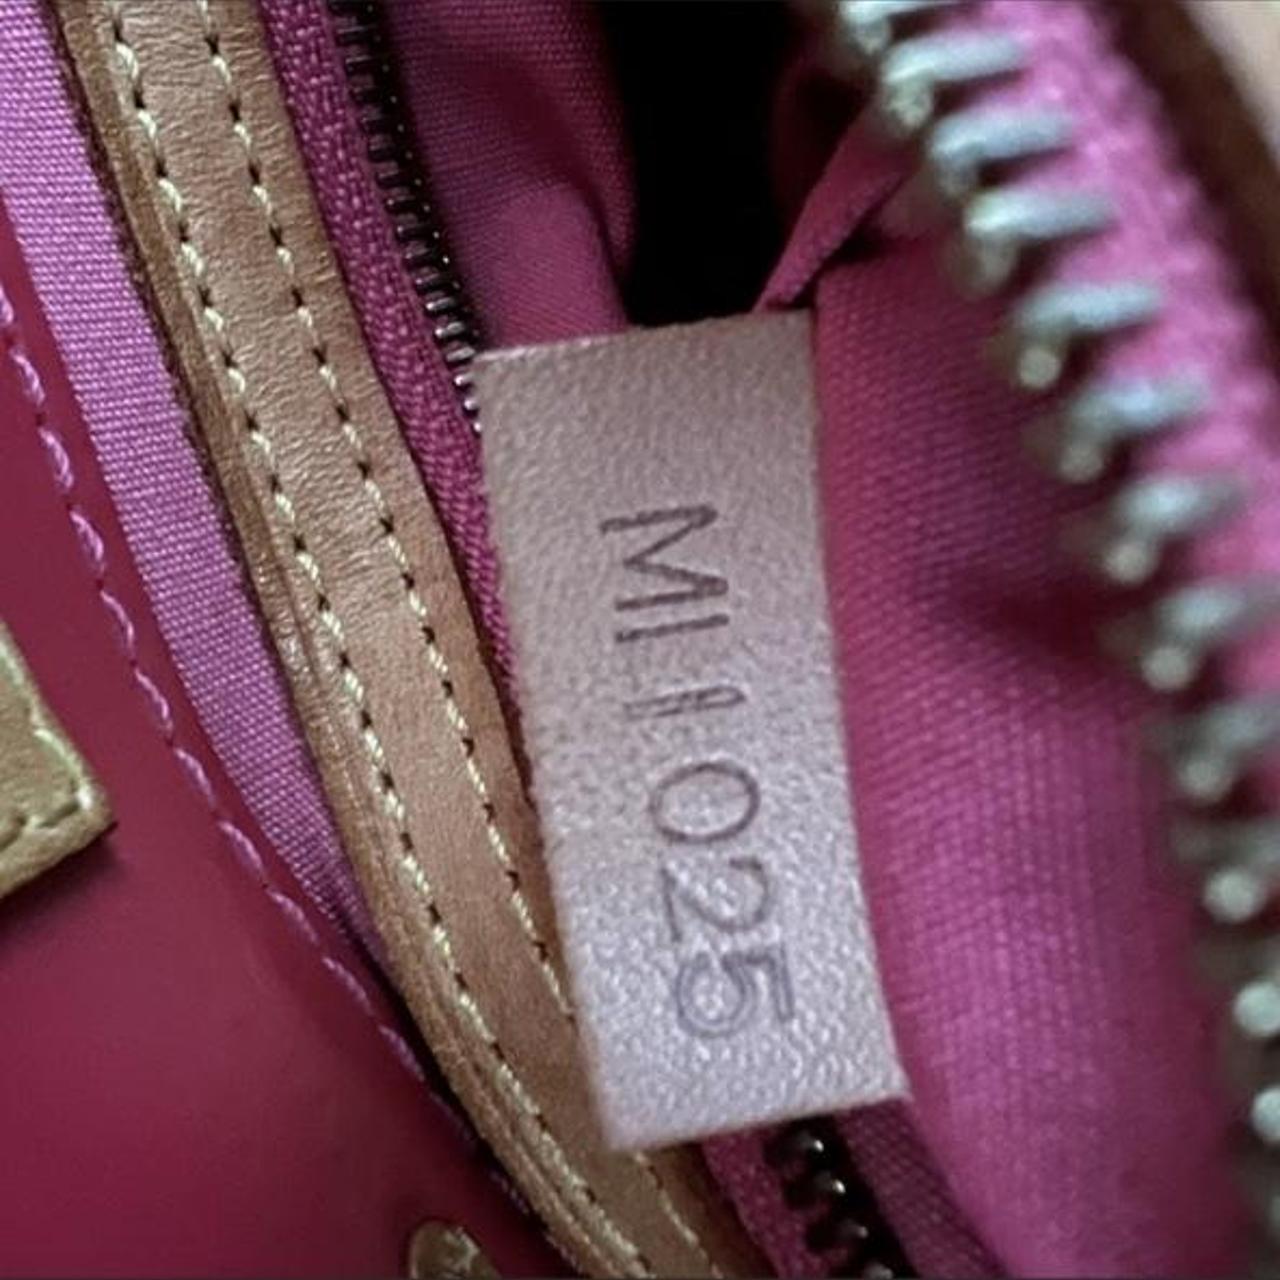 Louis Vuitton Vernis Reade pm Mini Tote bag in the - Depop